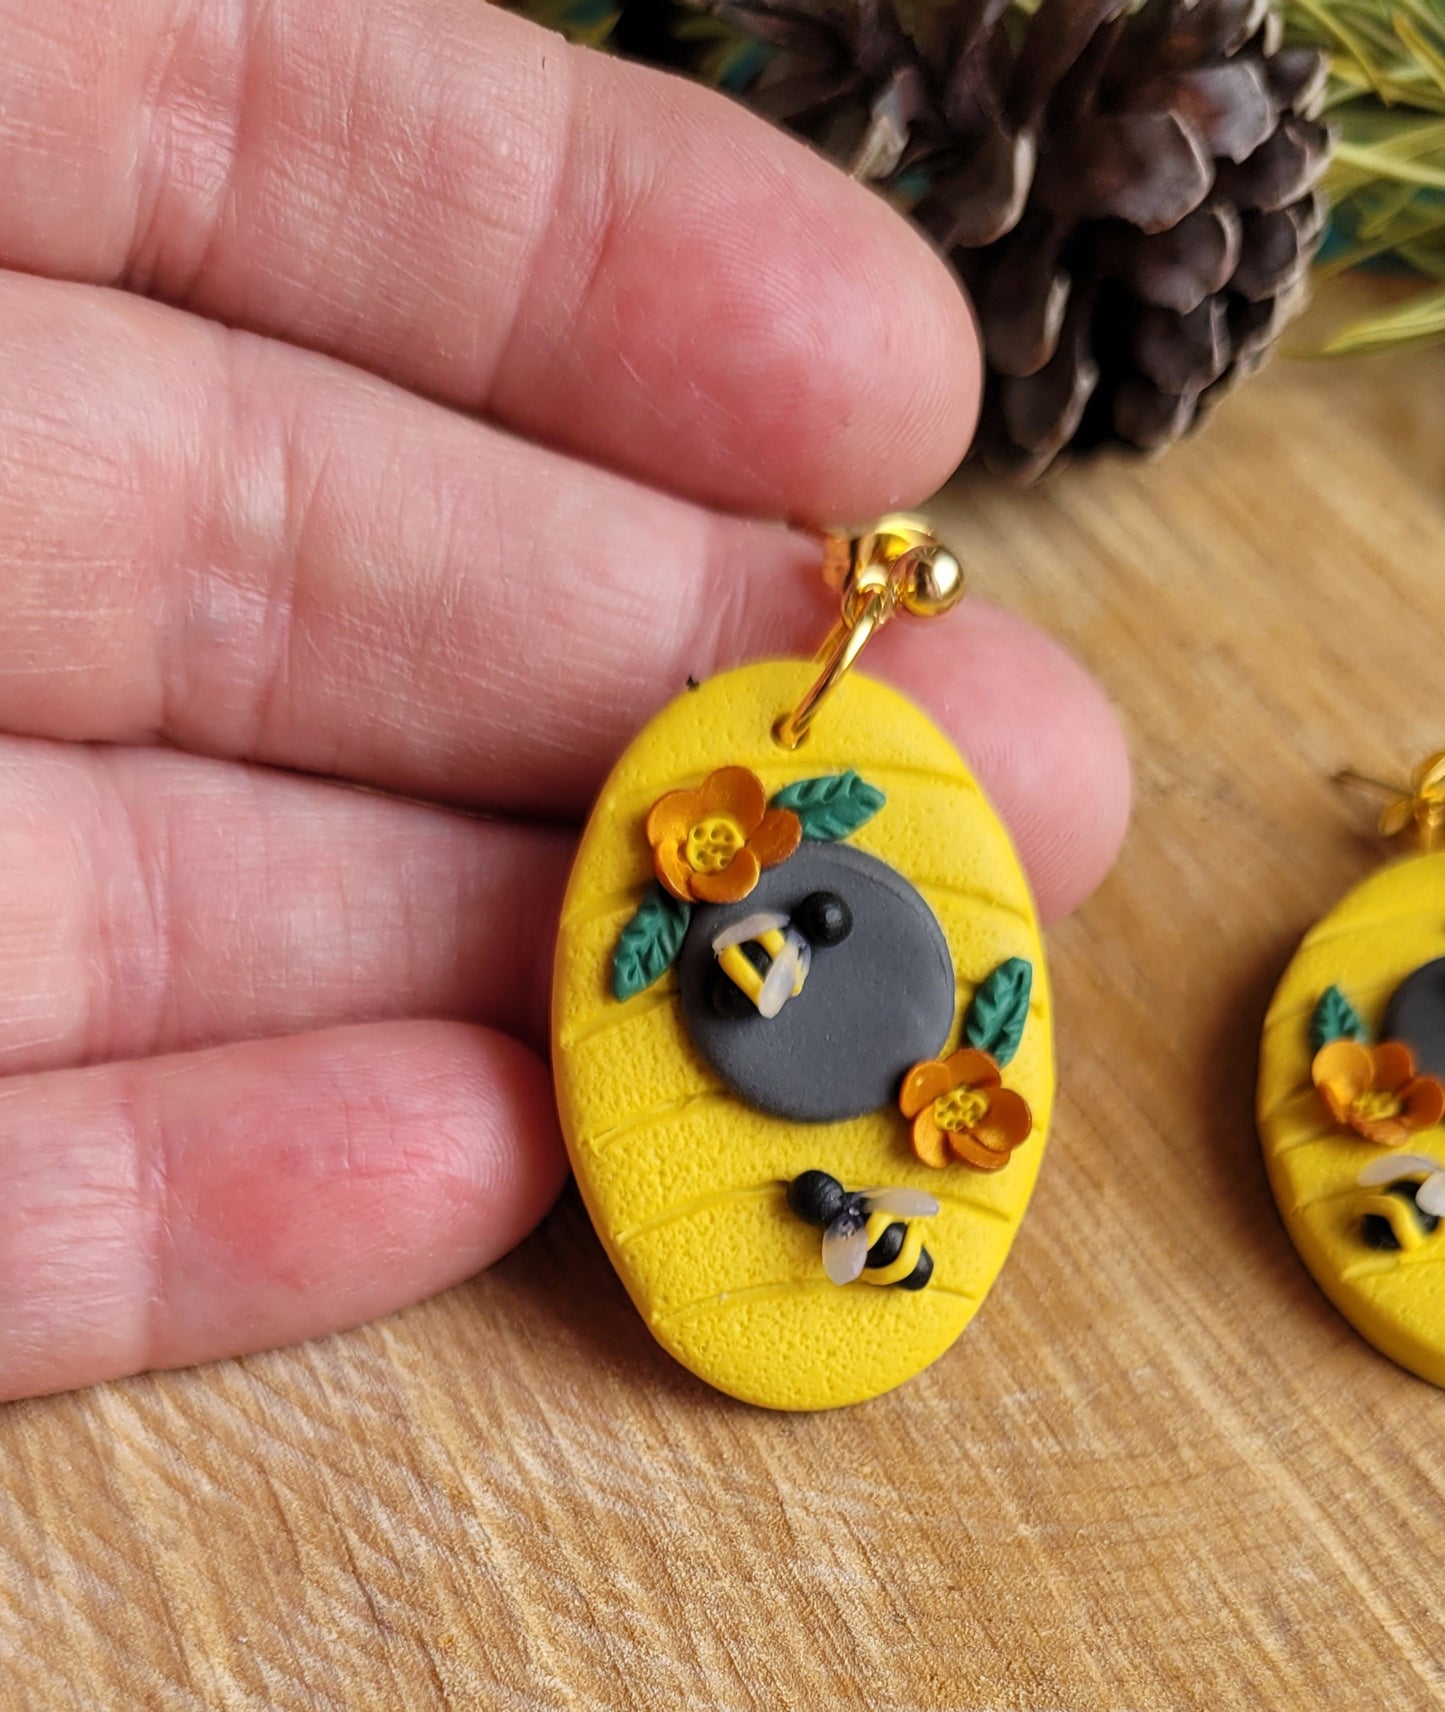 Beehive earrings| Bee earrings| Honeycomb jewelry